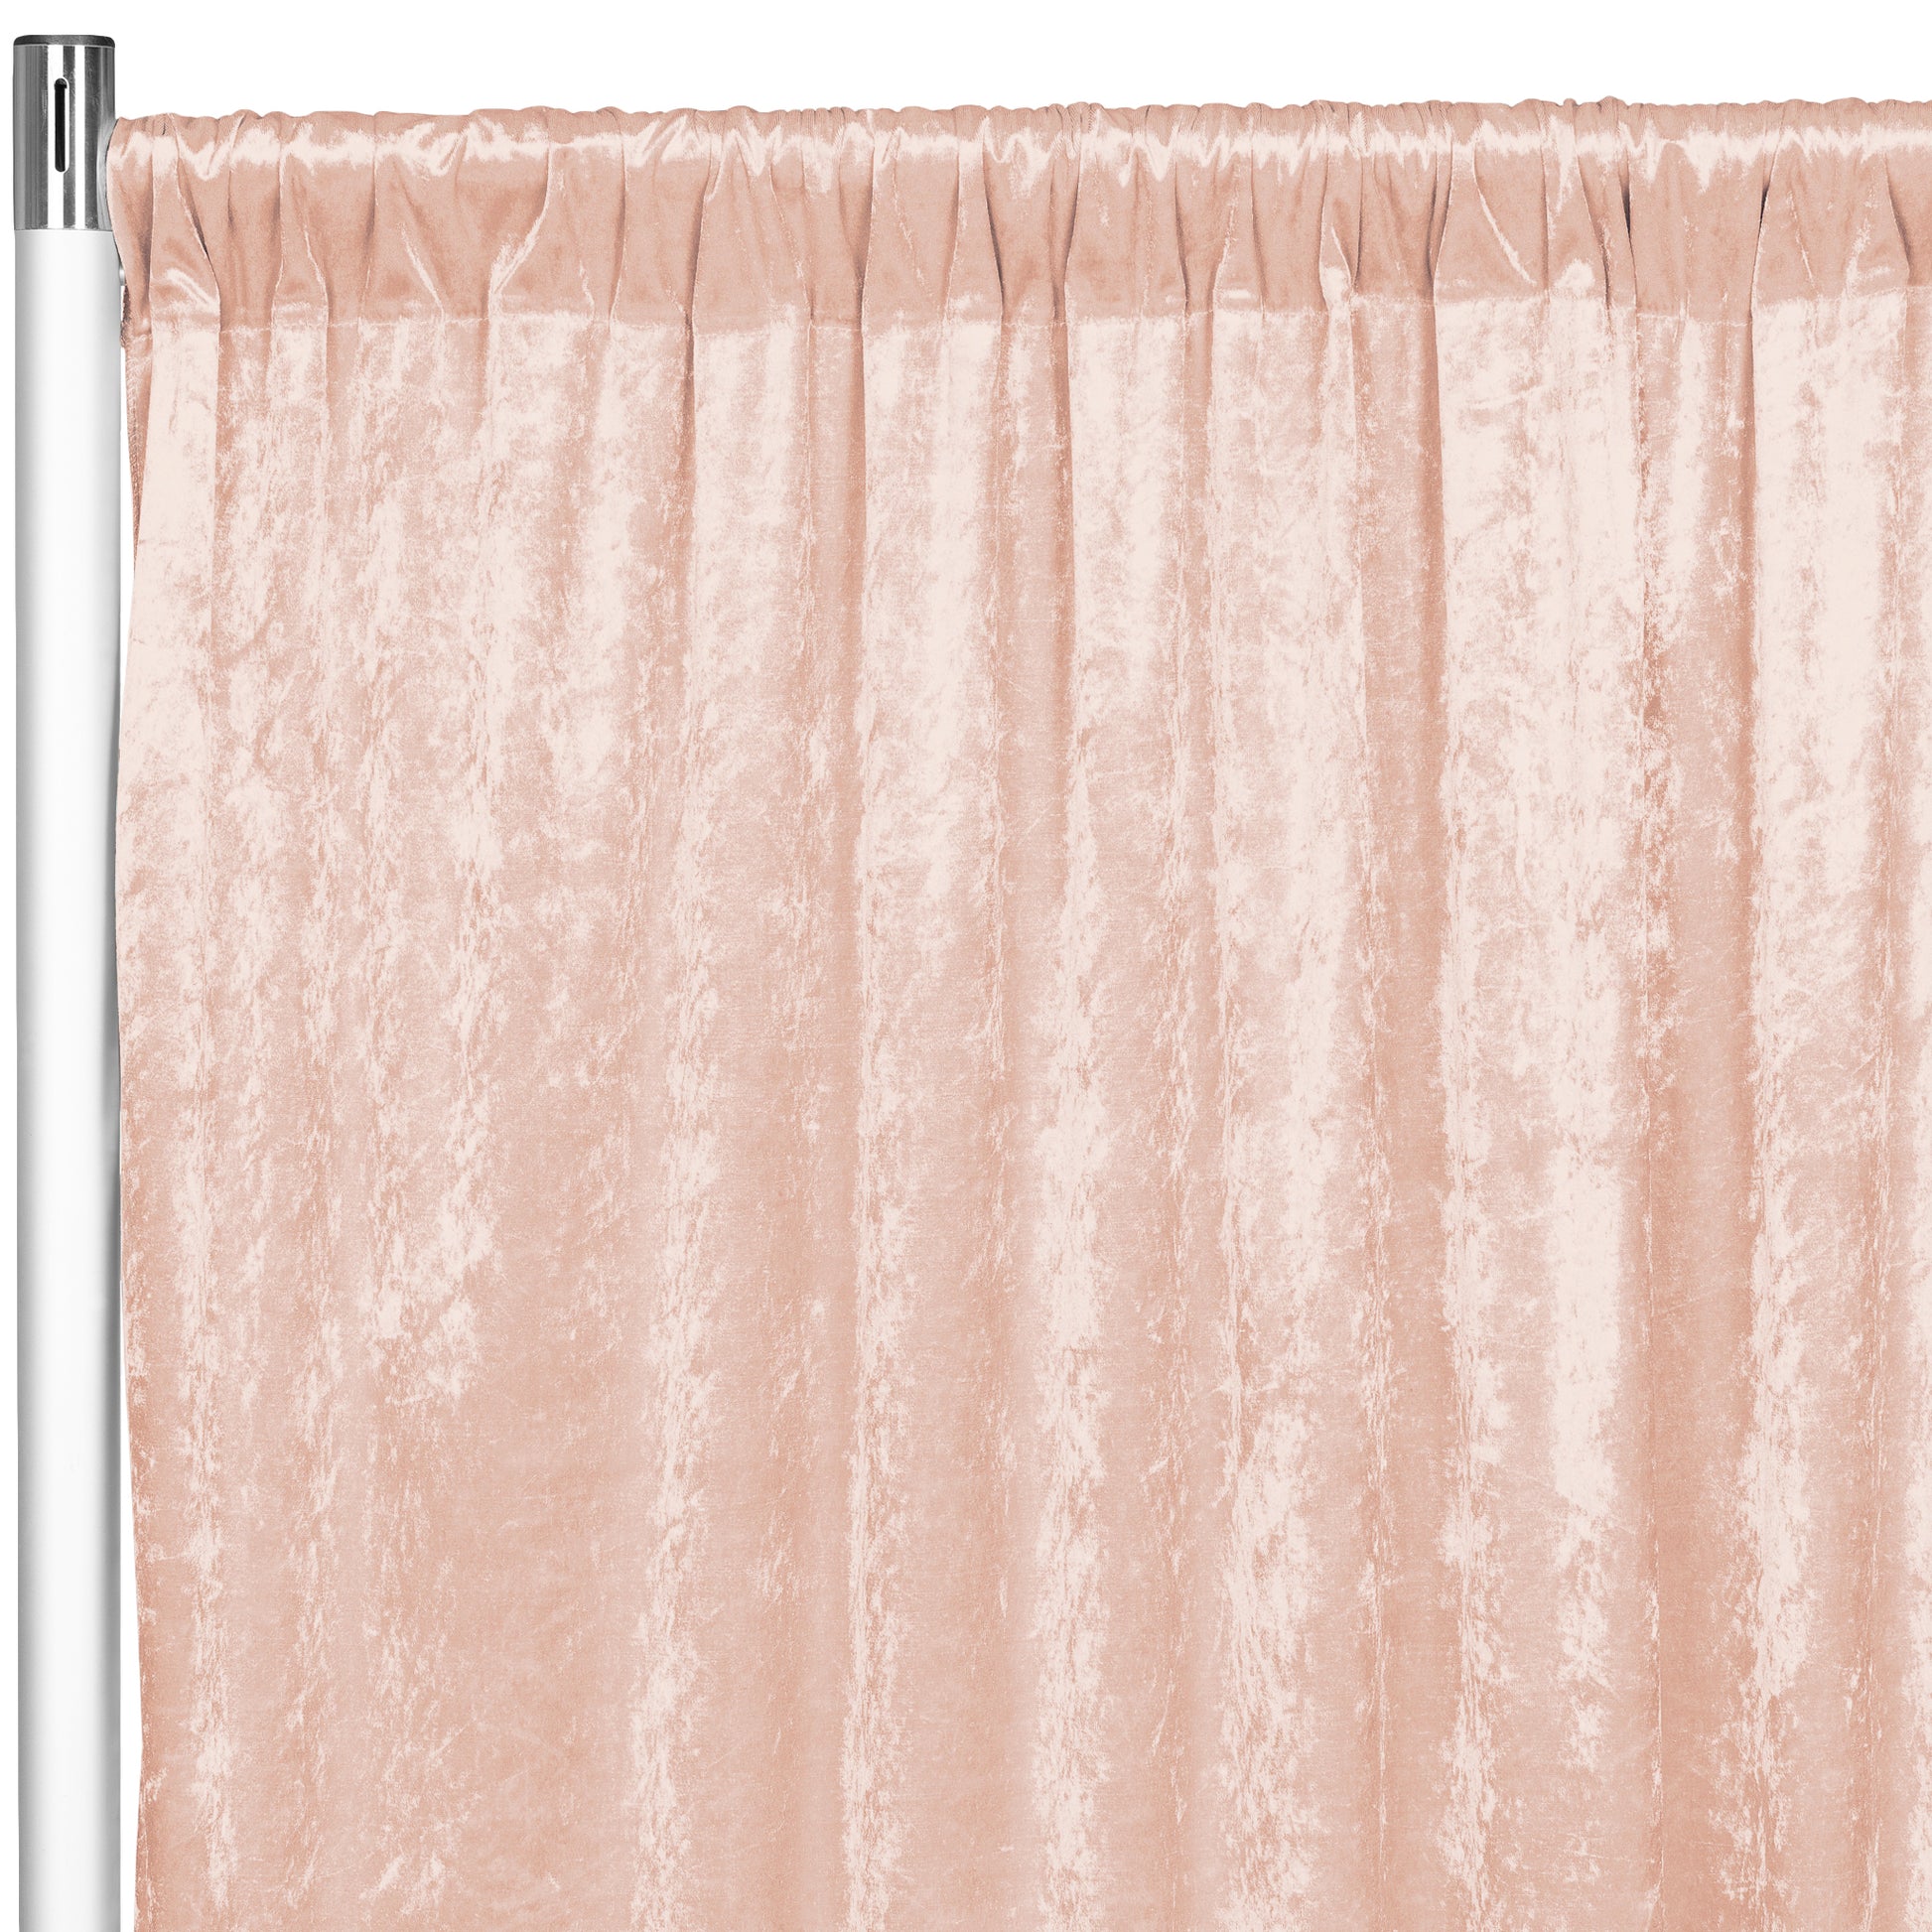 Velvet 16ft H x 52" W Drape/Backdrop Curtain Panel - Blush/Rose Gold